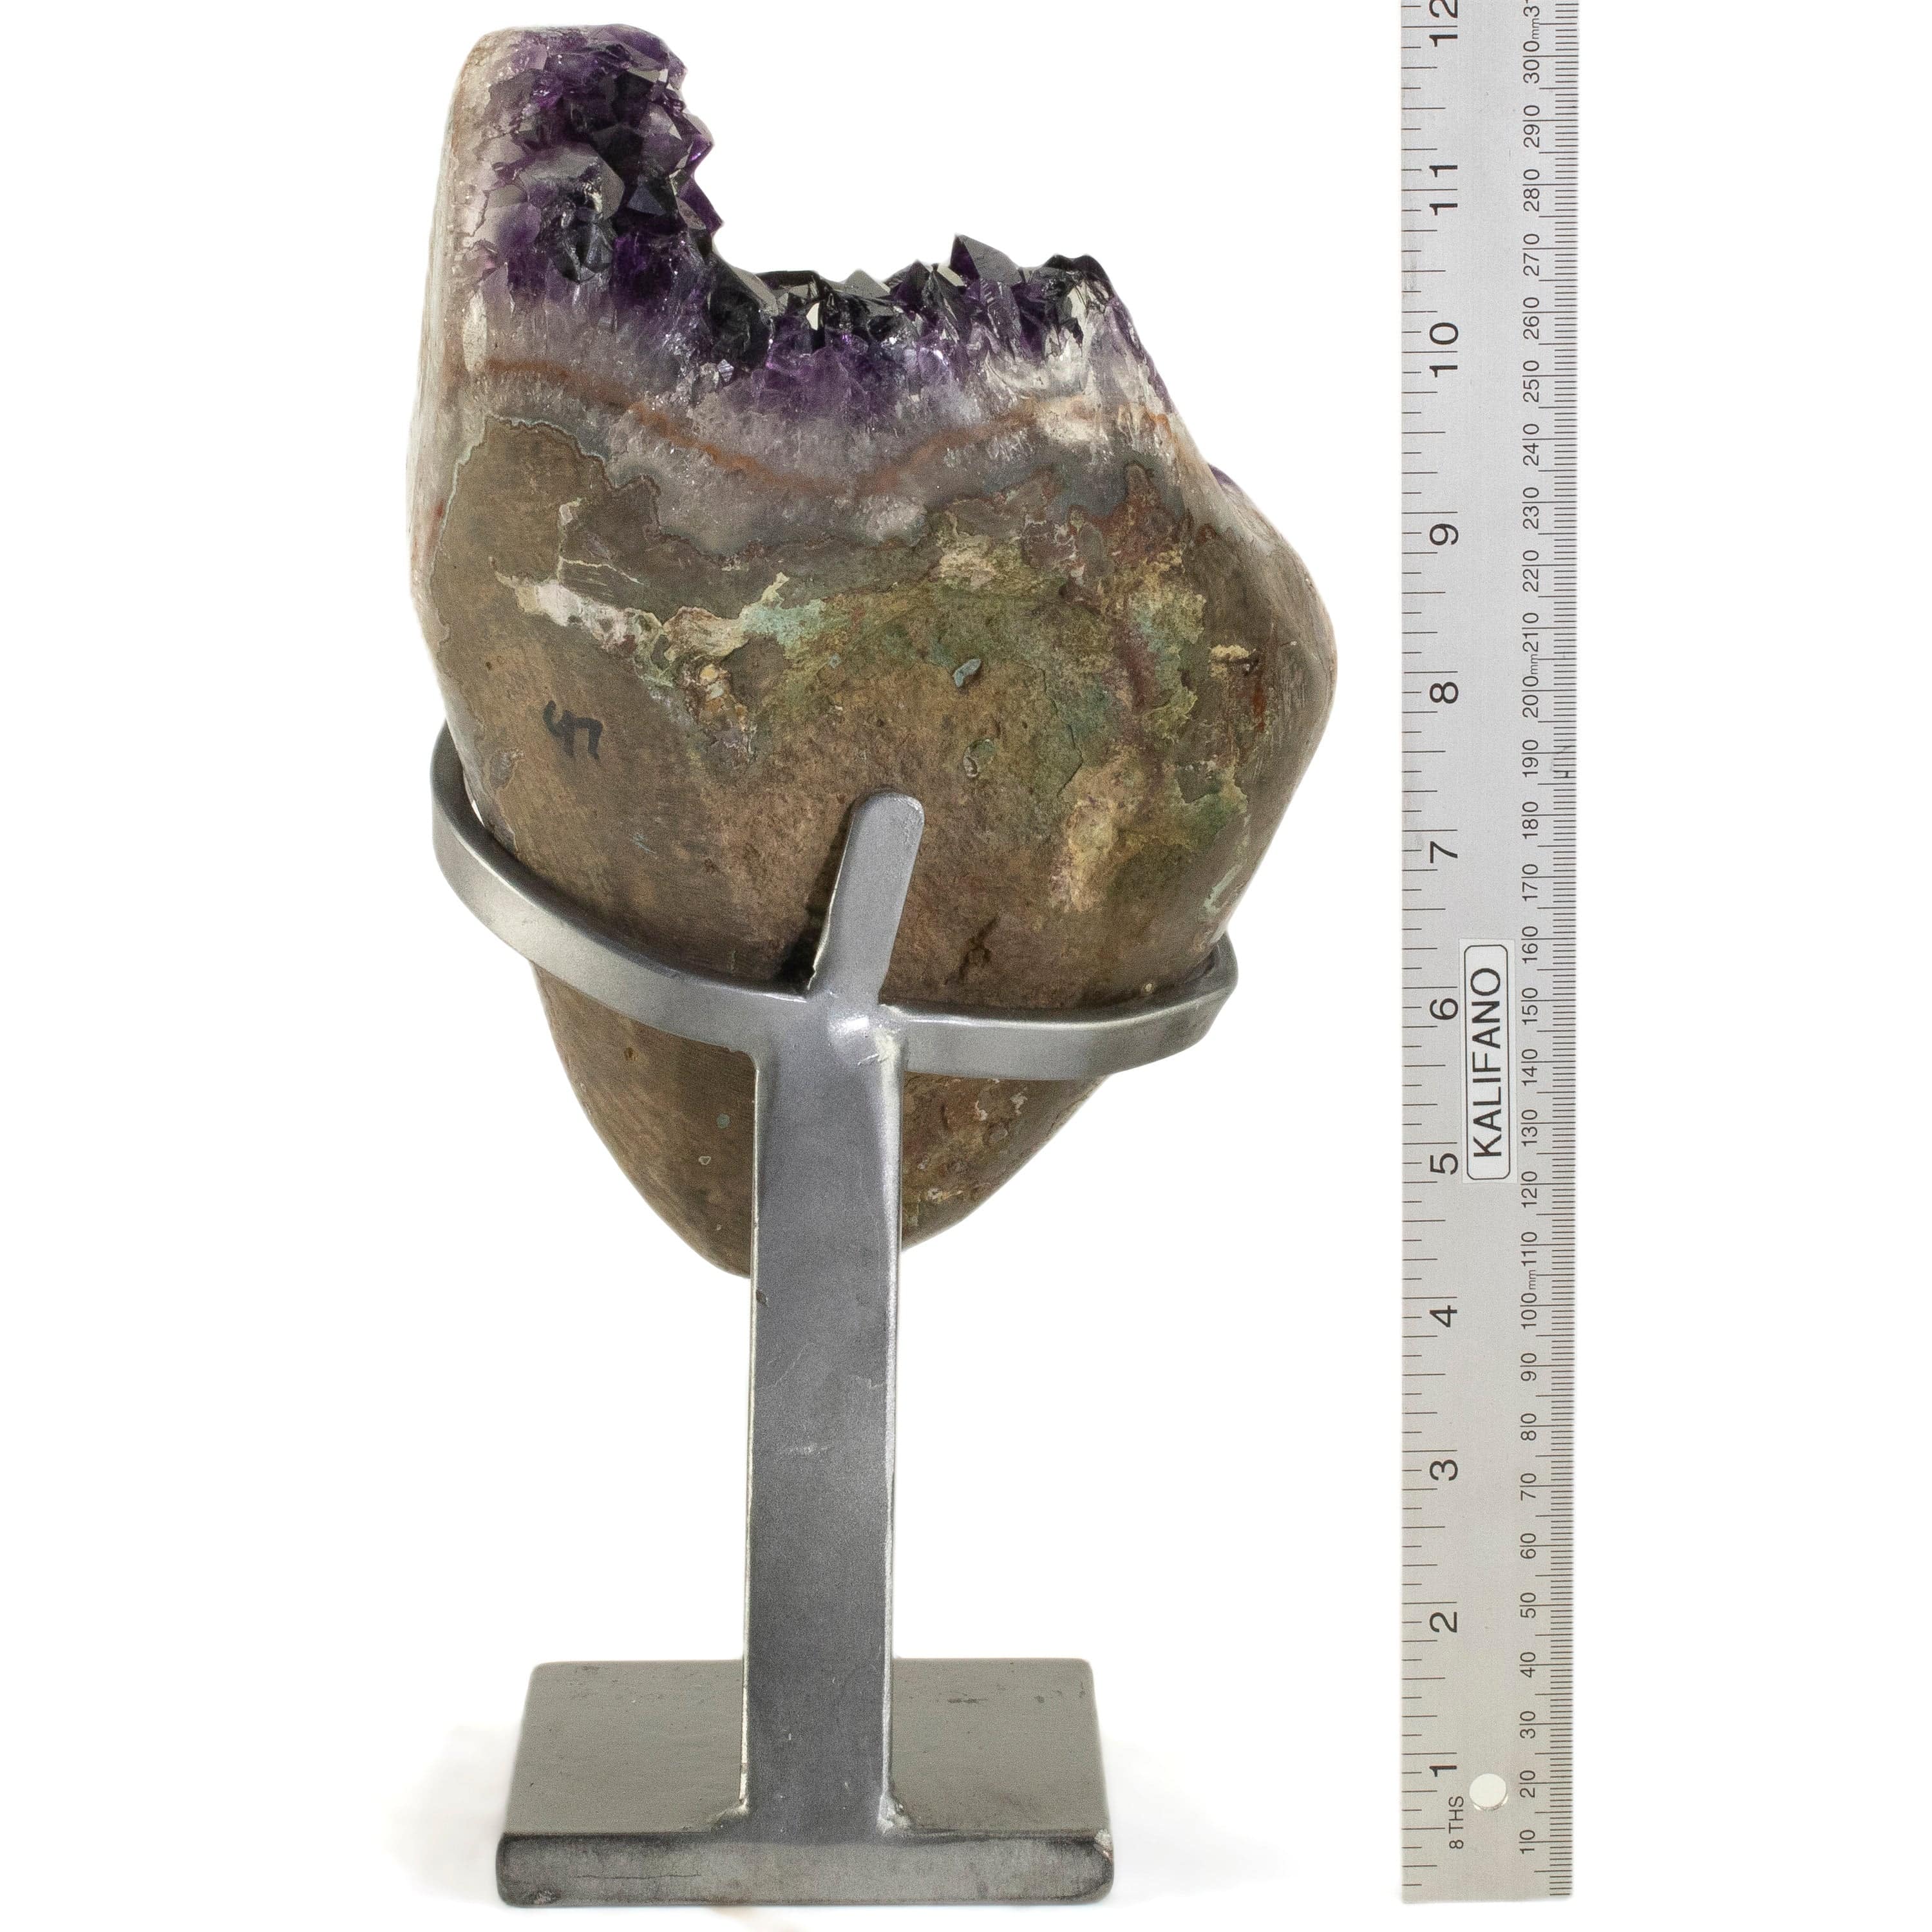 Kalifano Amethyst Uruguayan Amethyst Geode on Custom Stand - 10.4 lbs / 12 in. UAG4700.003